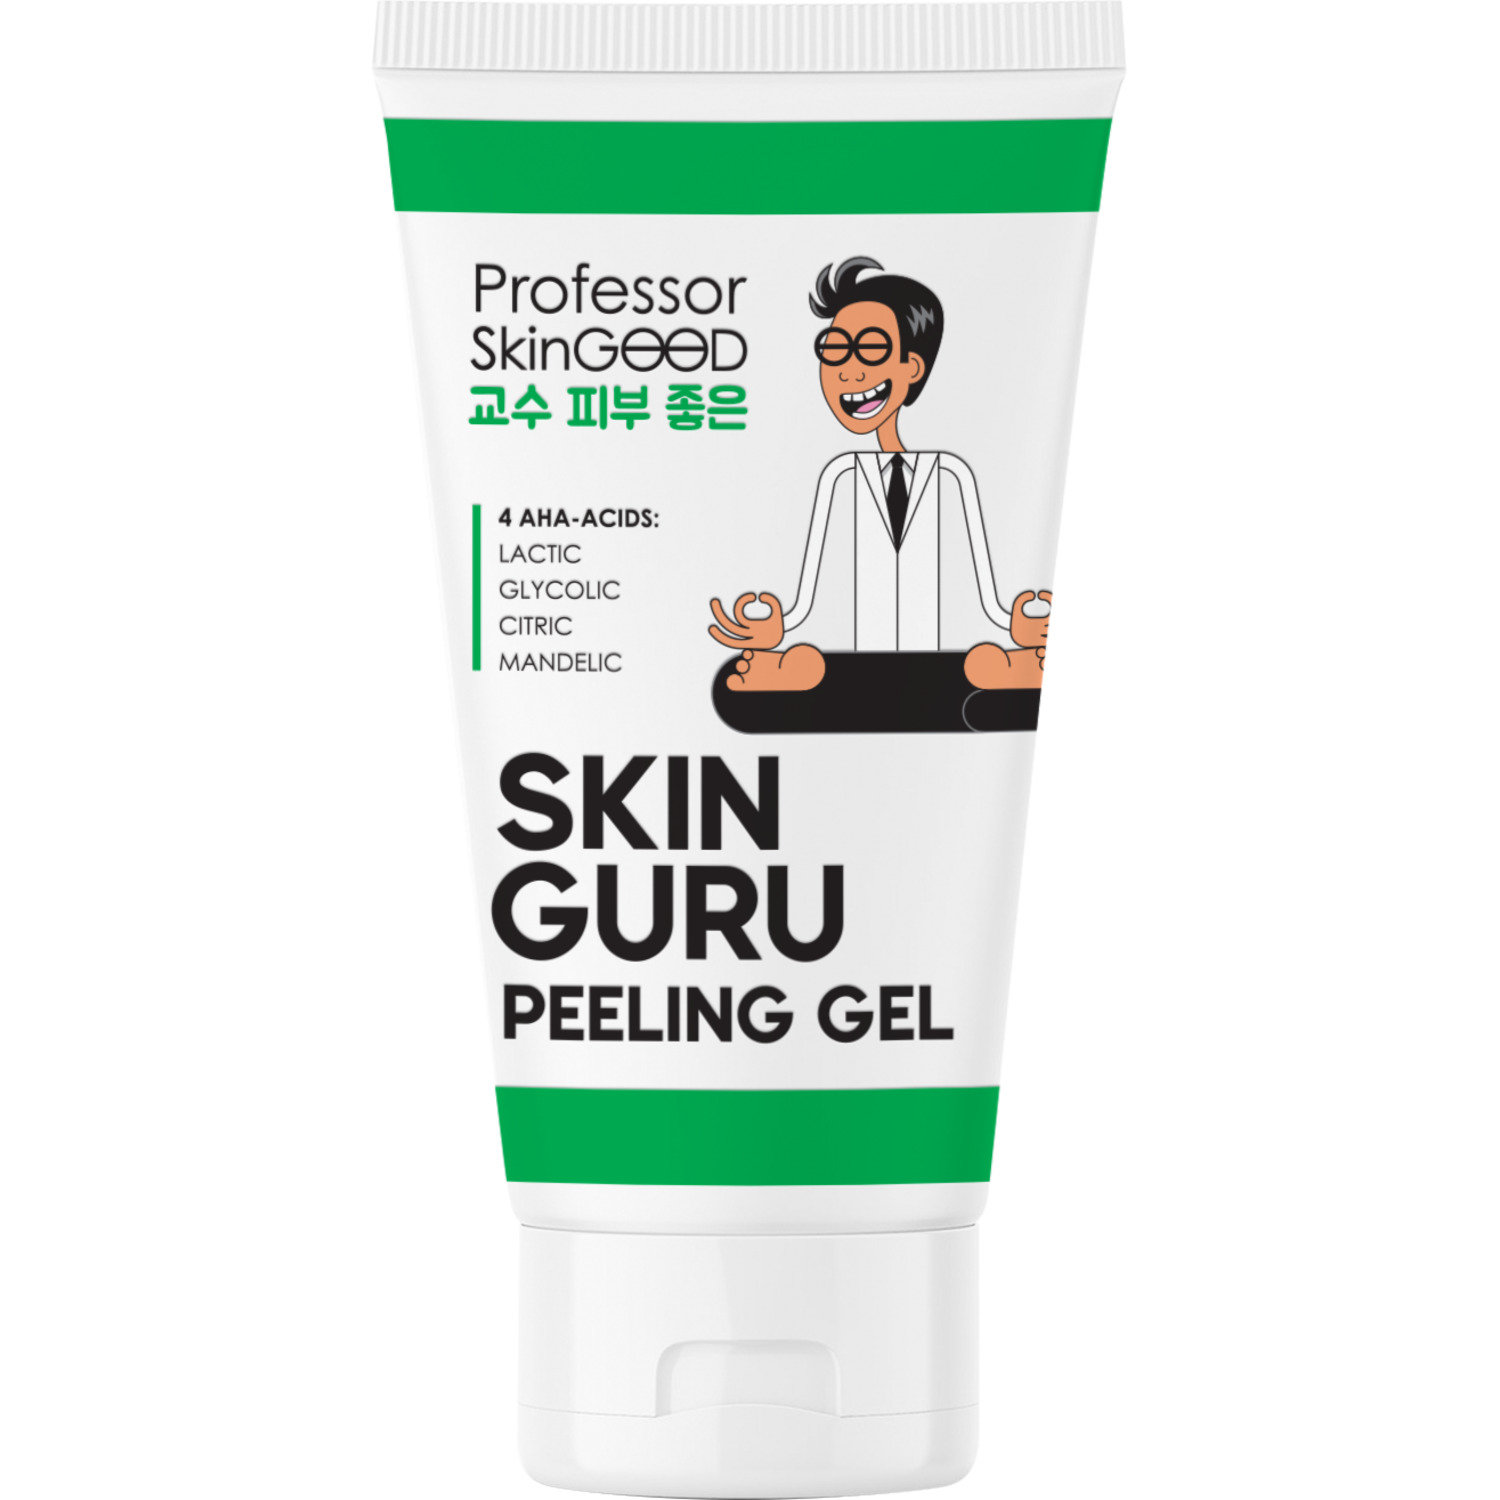 фото Пилинг скатка professor skingood "skin guru peeling gel" для лица с aha-кислотами, отшелушивание и обновление кожи, уход за лицом, 35мл